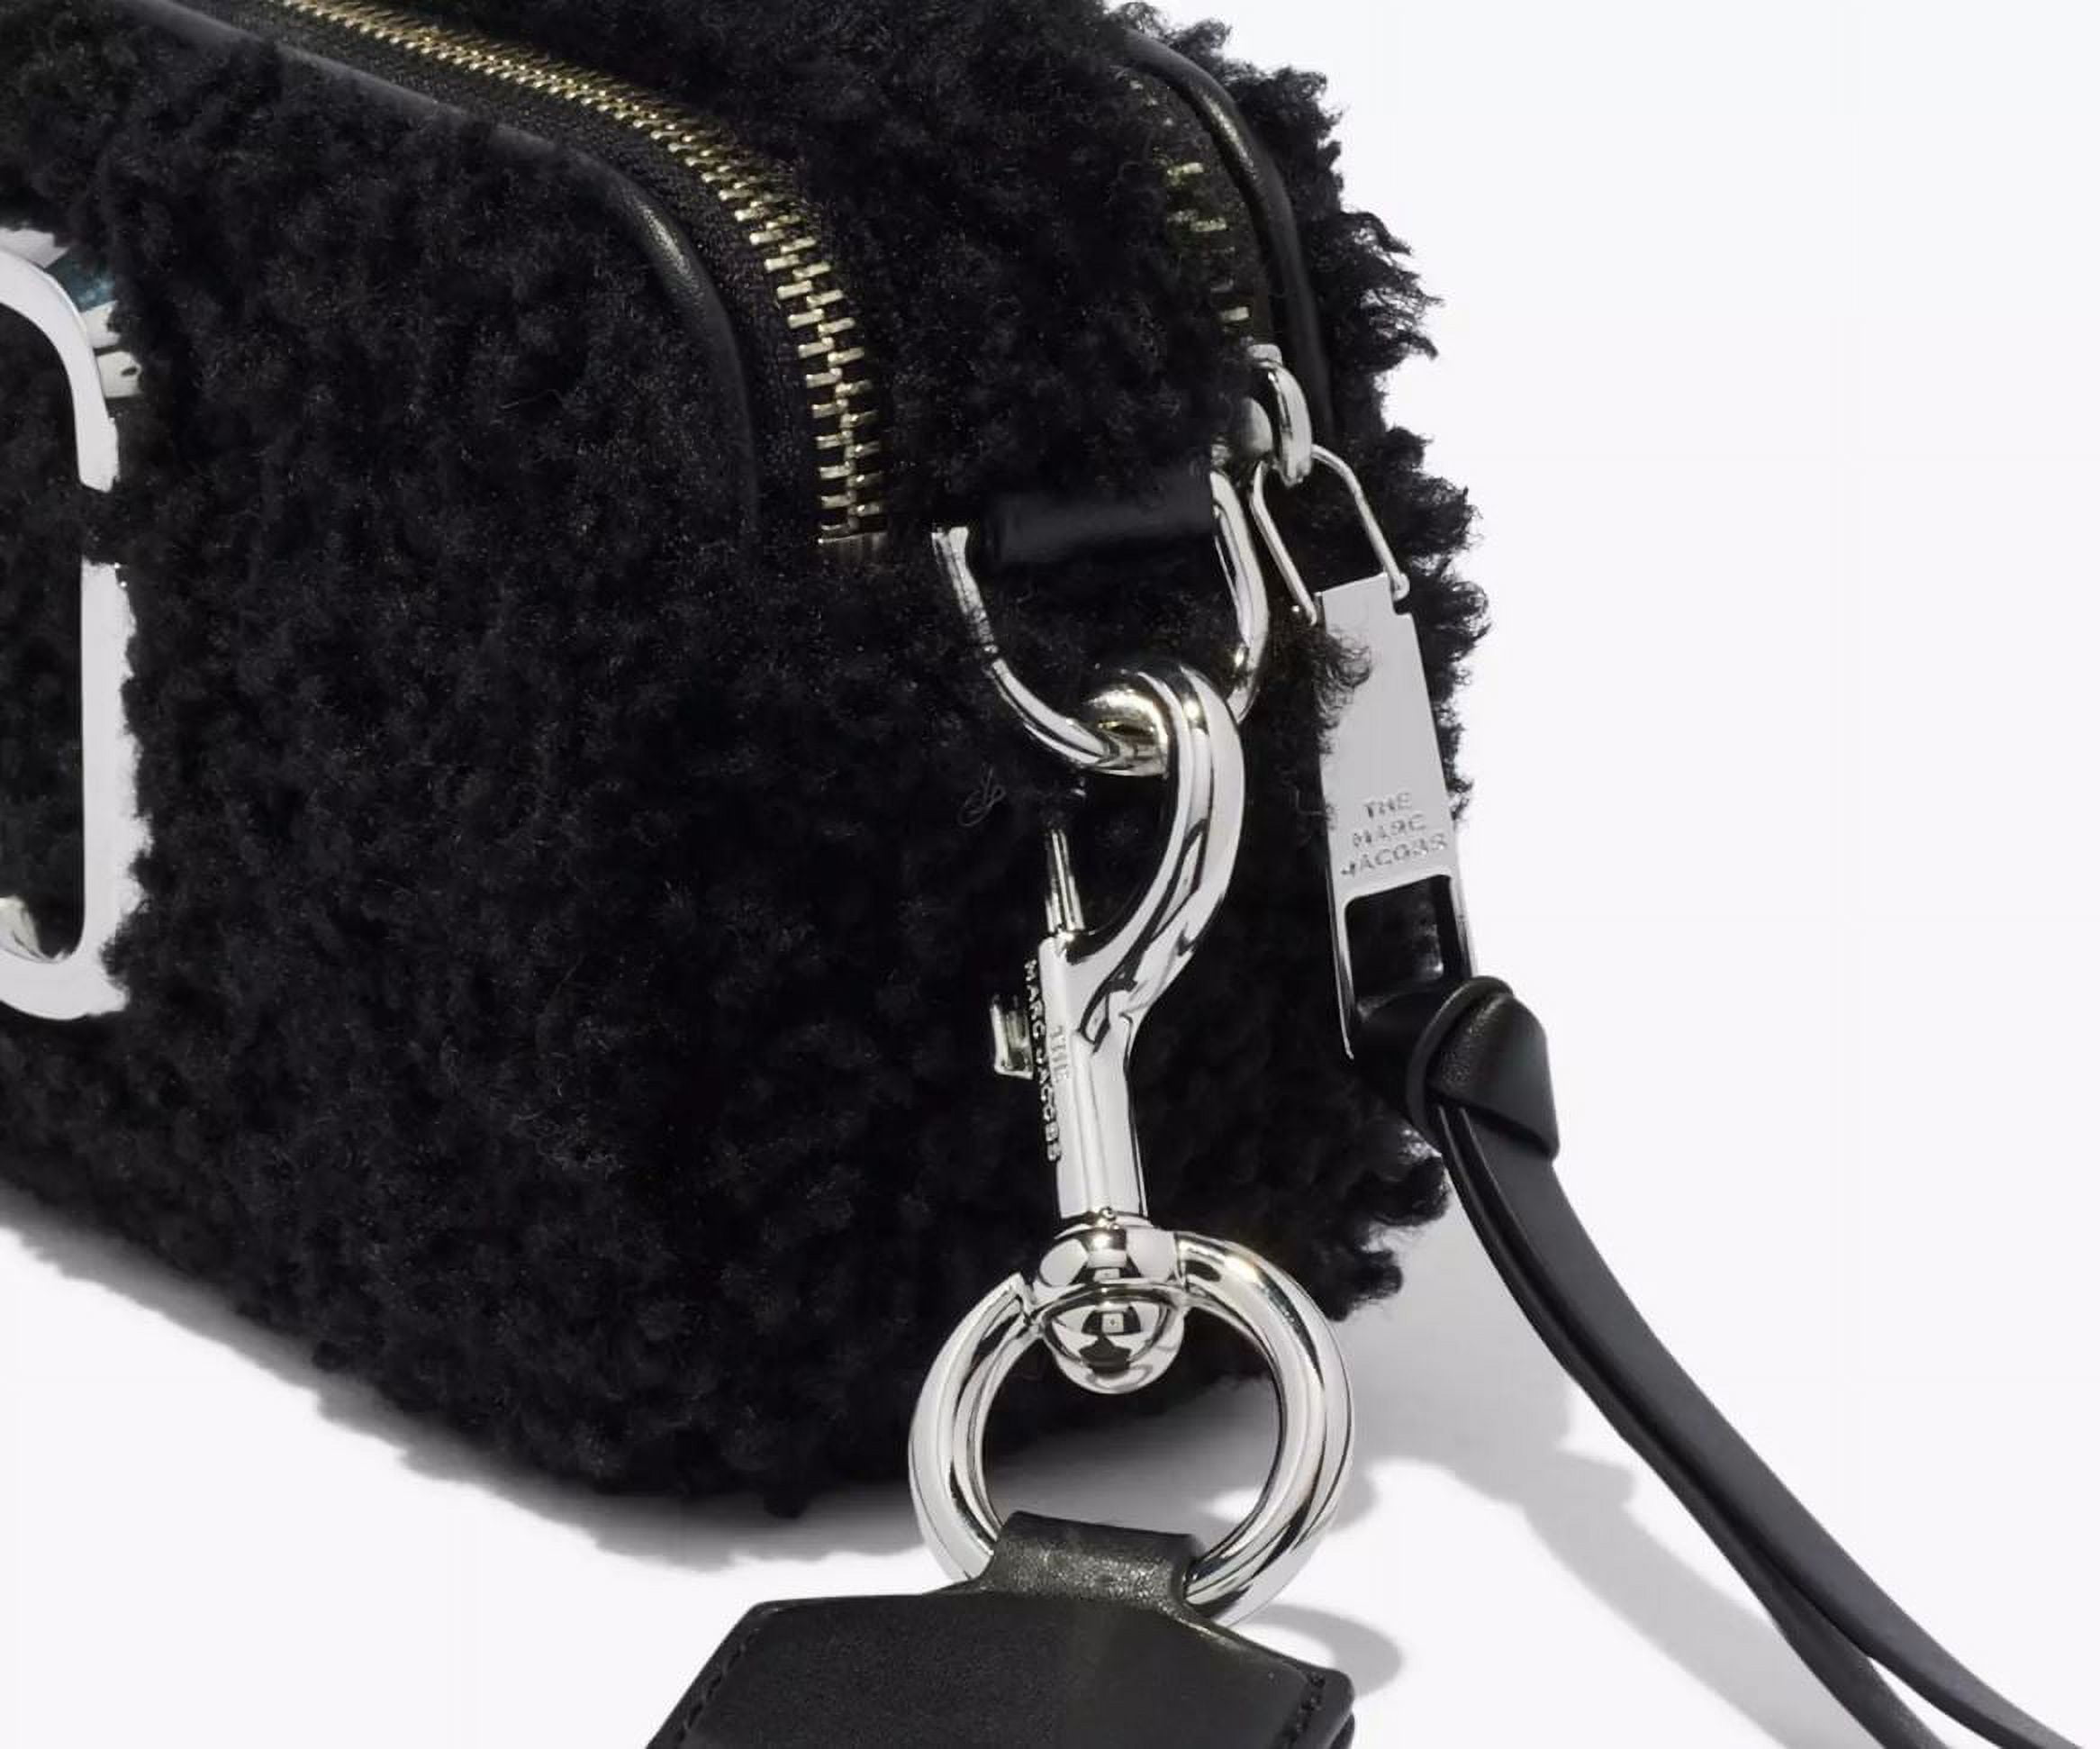 Marc Jacobs The Snapshot Crossbody Bag - Khaki Multi • Price »